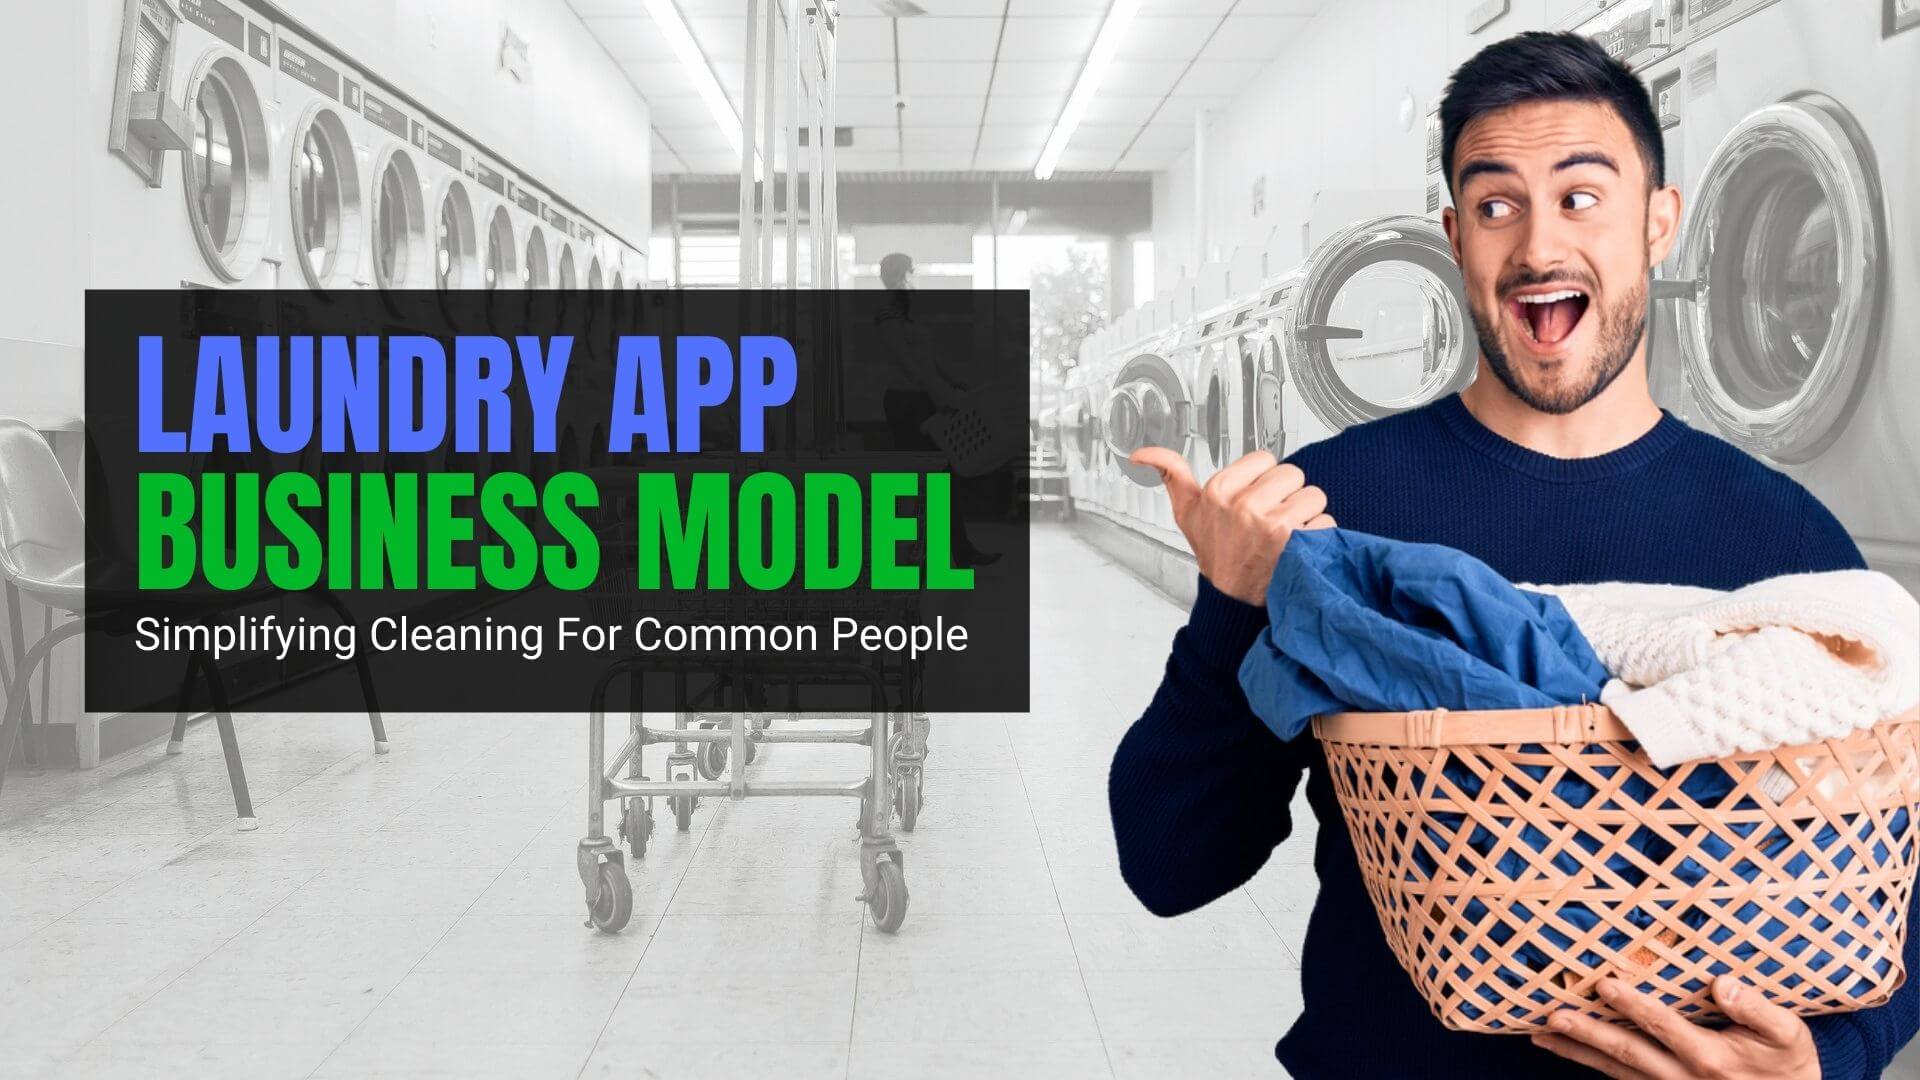 on-demand laundry app